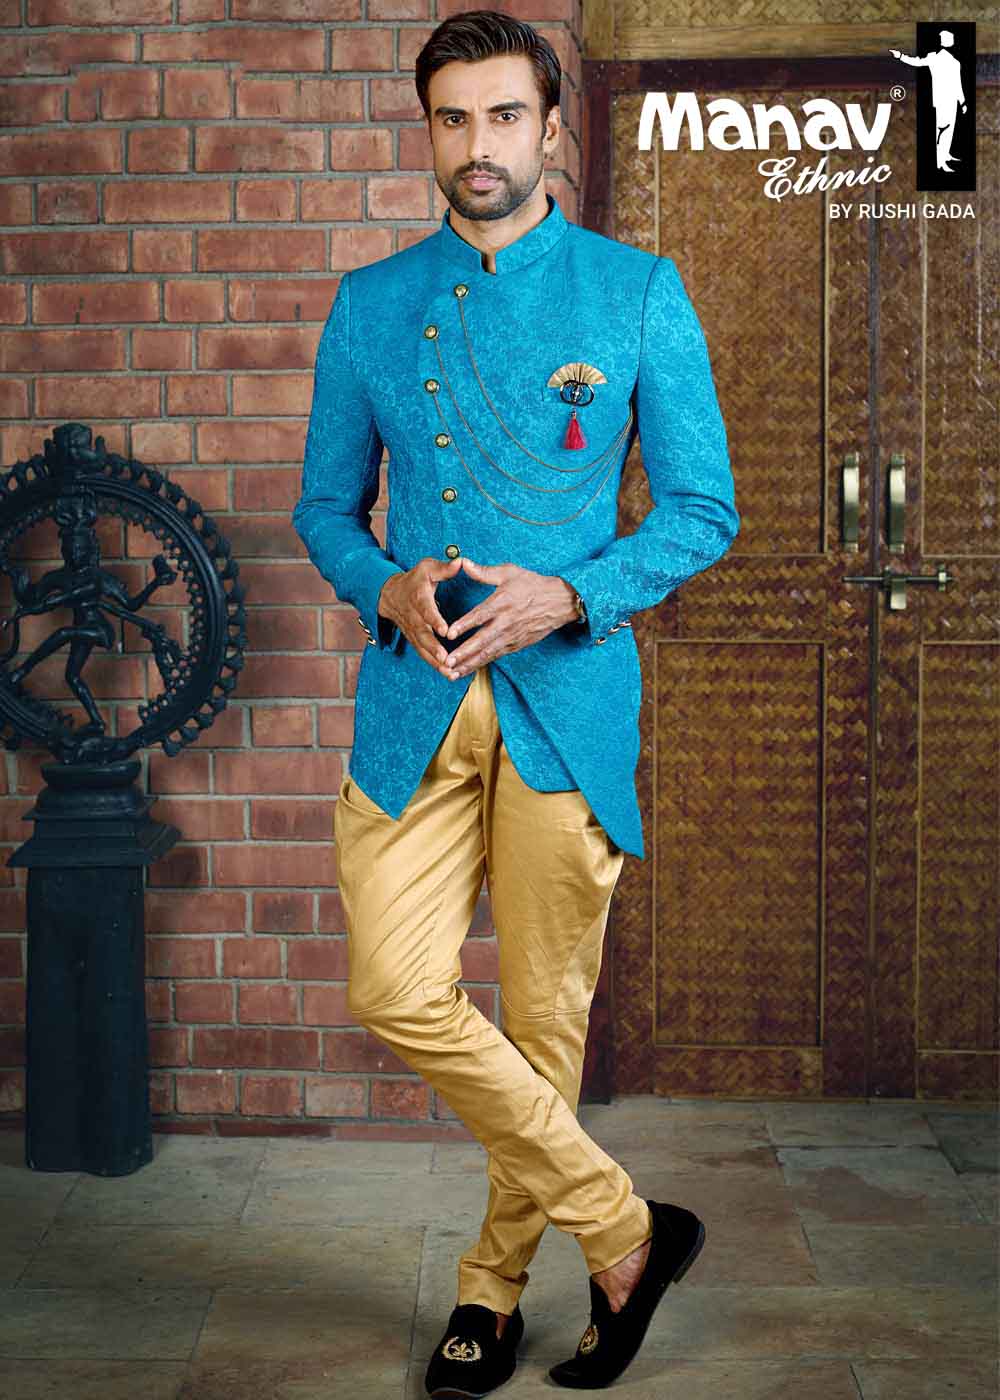 Buy Navy Blue Self-Checked Designer Jodhpuri Suit | Manav Ethnic